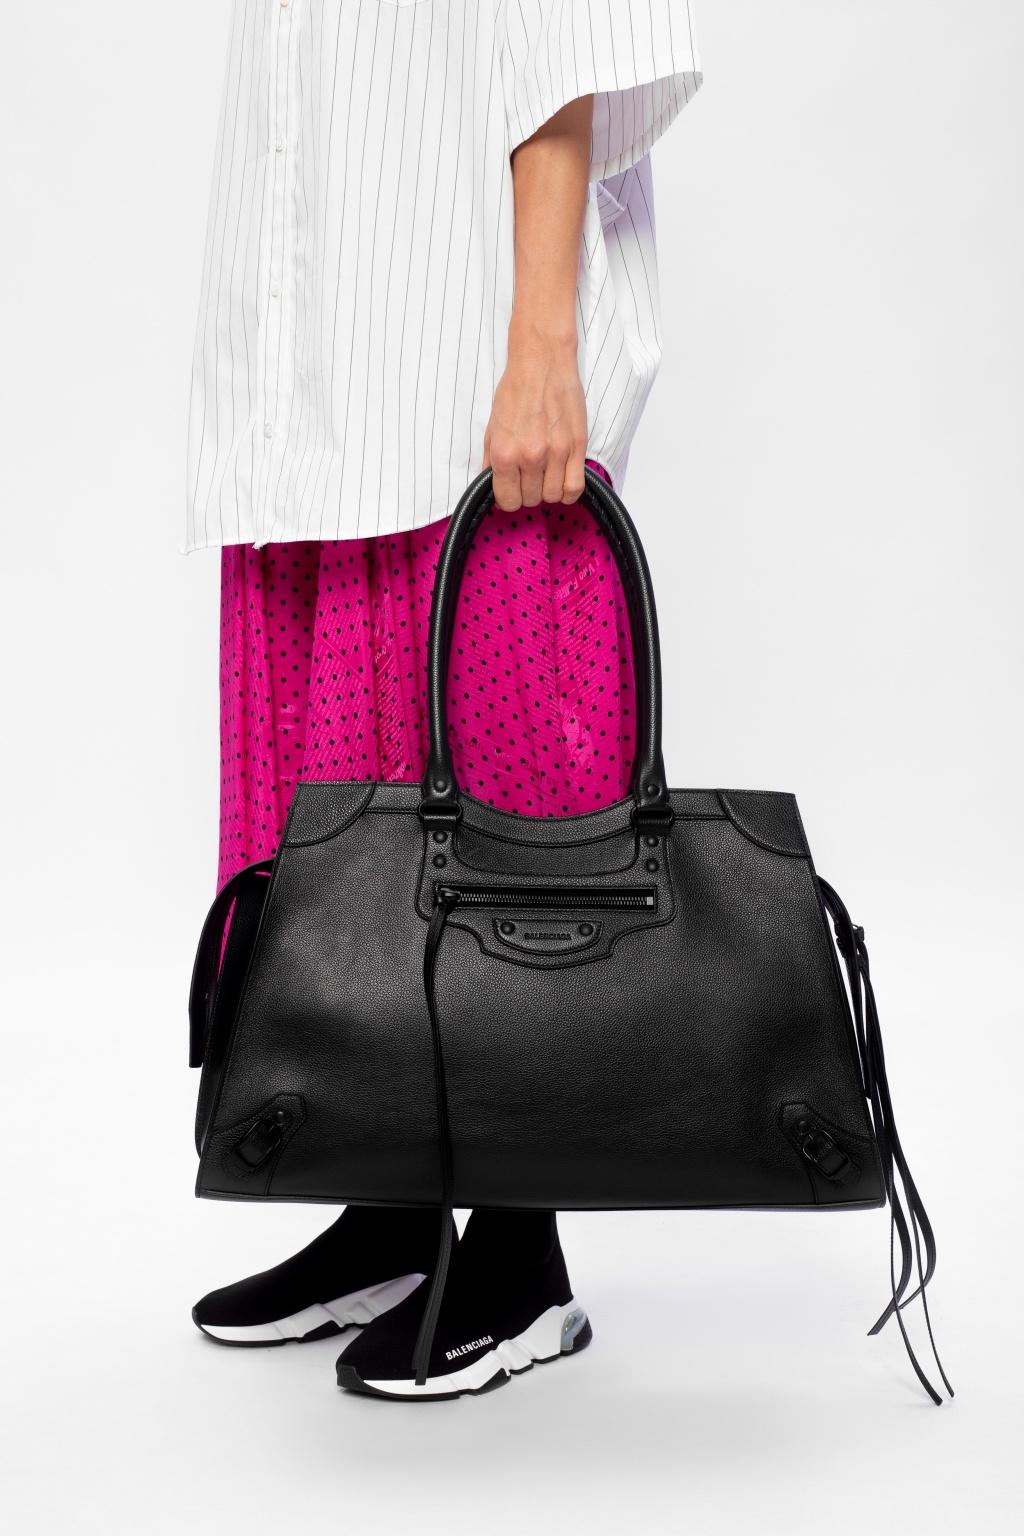 Balenciaga Classic City Shoulder Bag Mini Black in Lambskin with Palladium   US